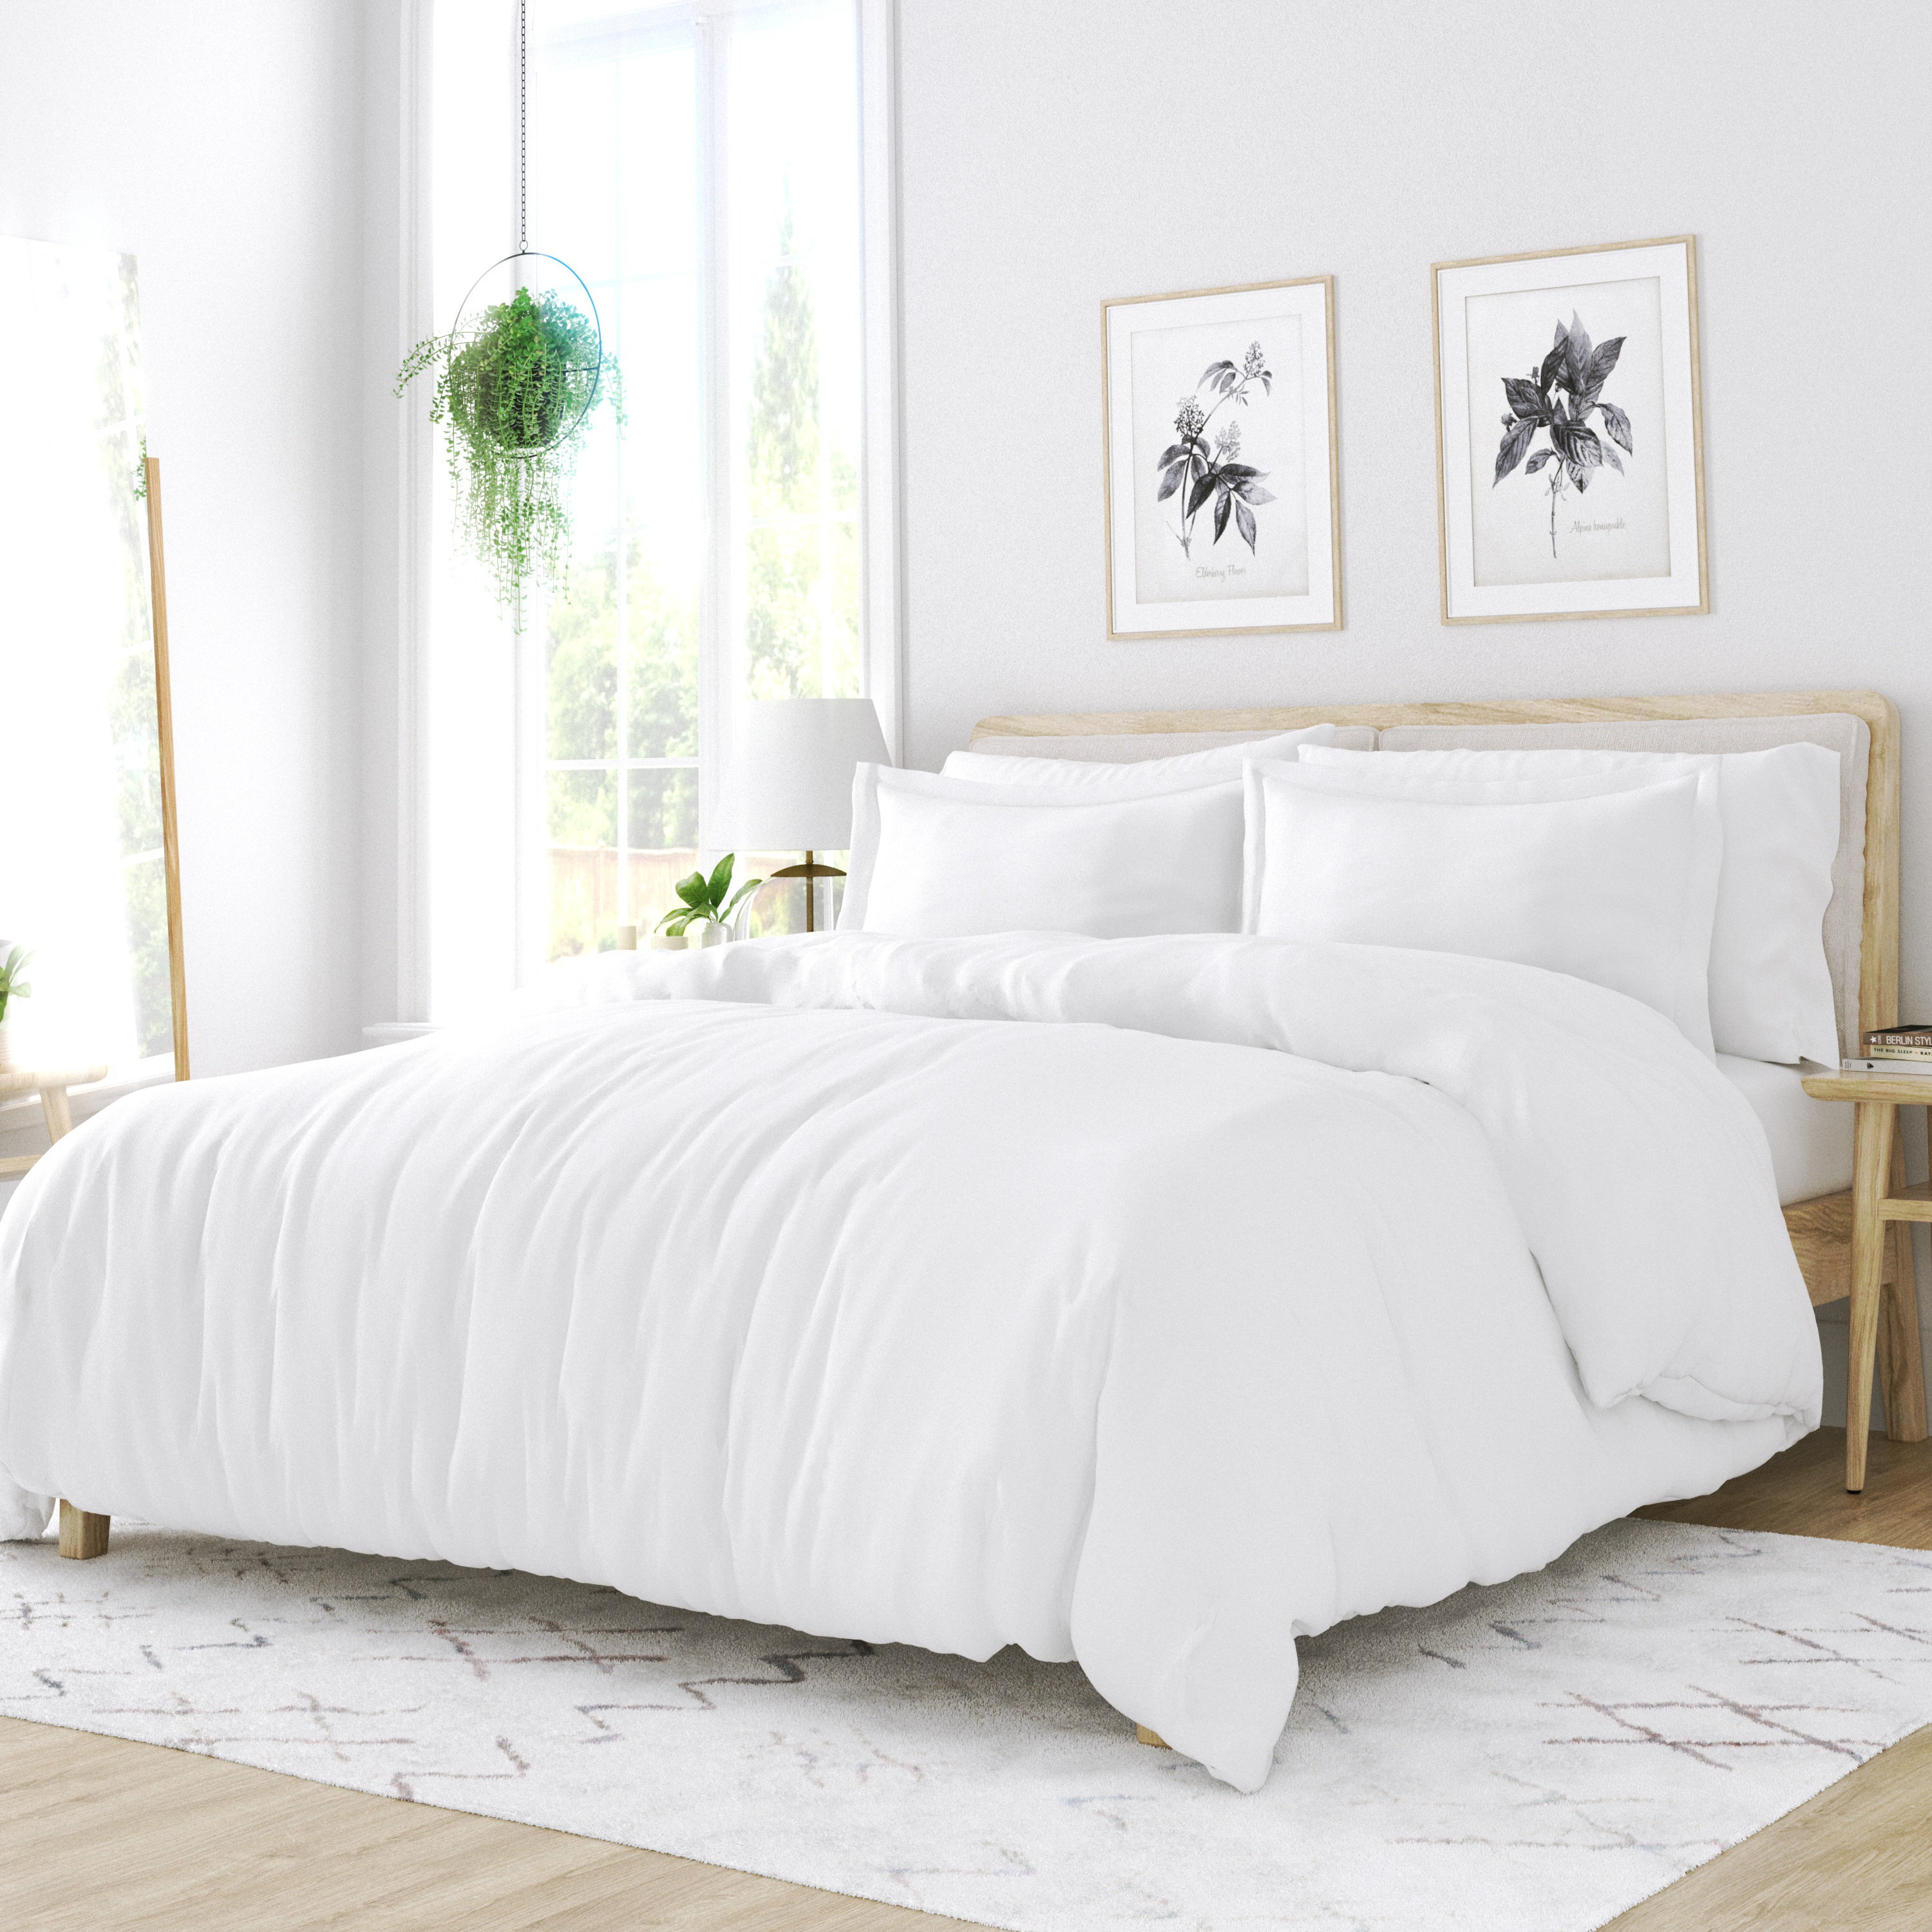 SALE] Supreme Black White Luxury Brand Premium Bedding Set Home Decor